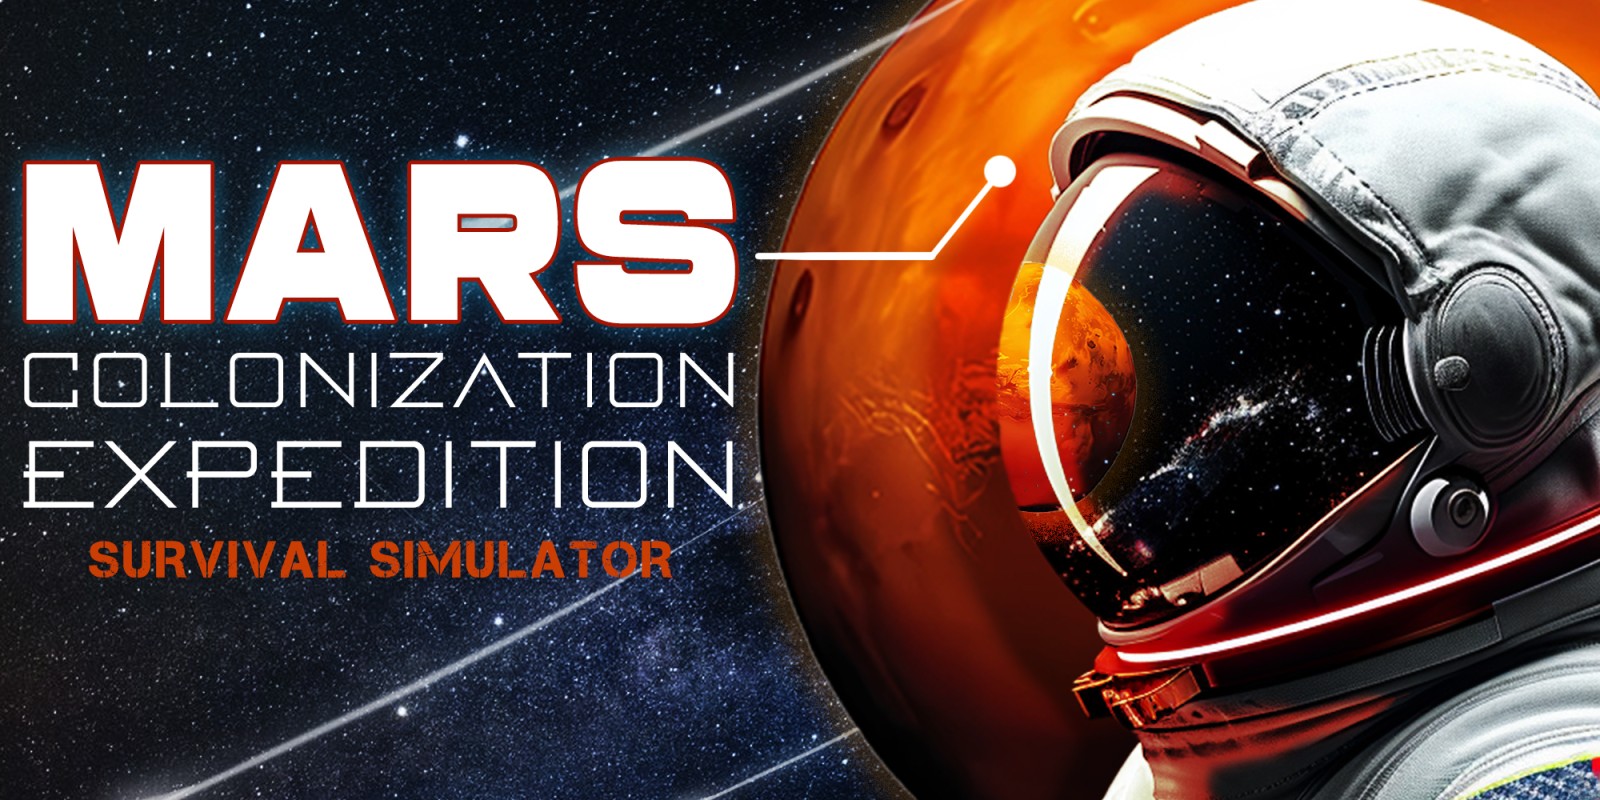 Mars Colonization Expedition: Survival Simulator